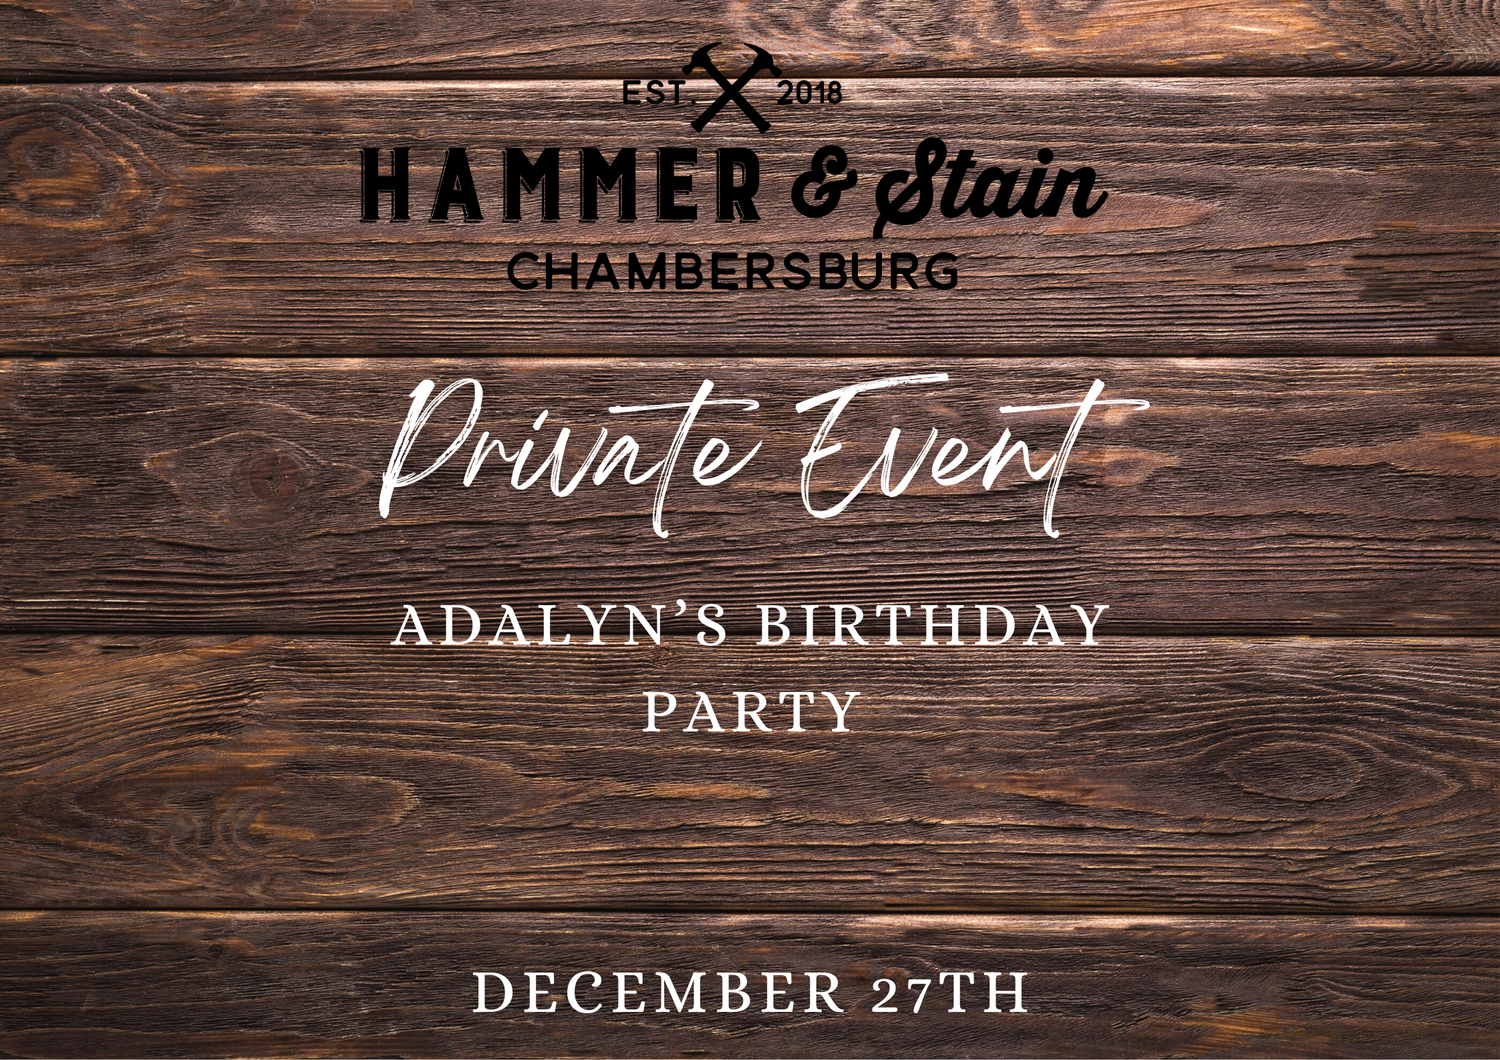 12/27/23 Adalyn's Birthday Party 1p-3p